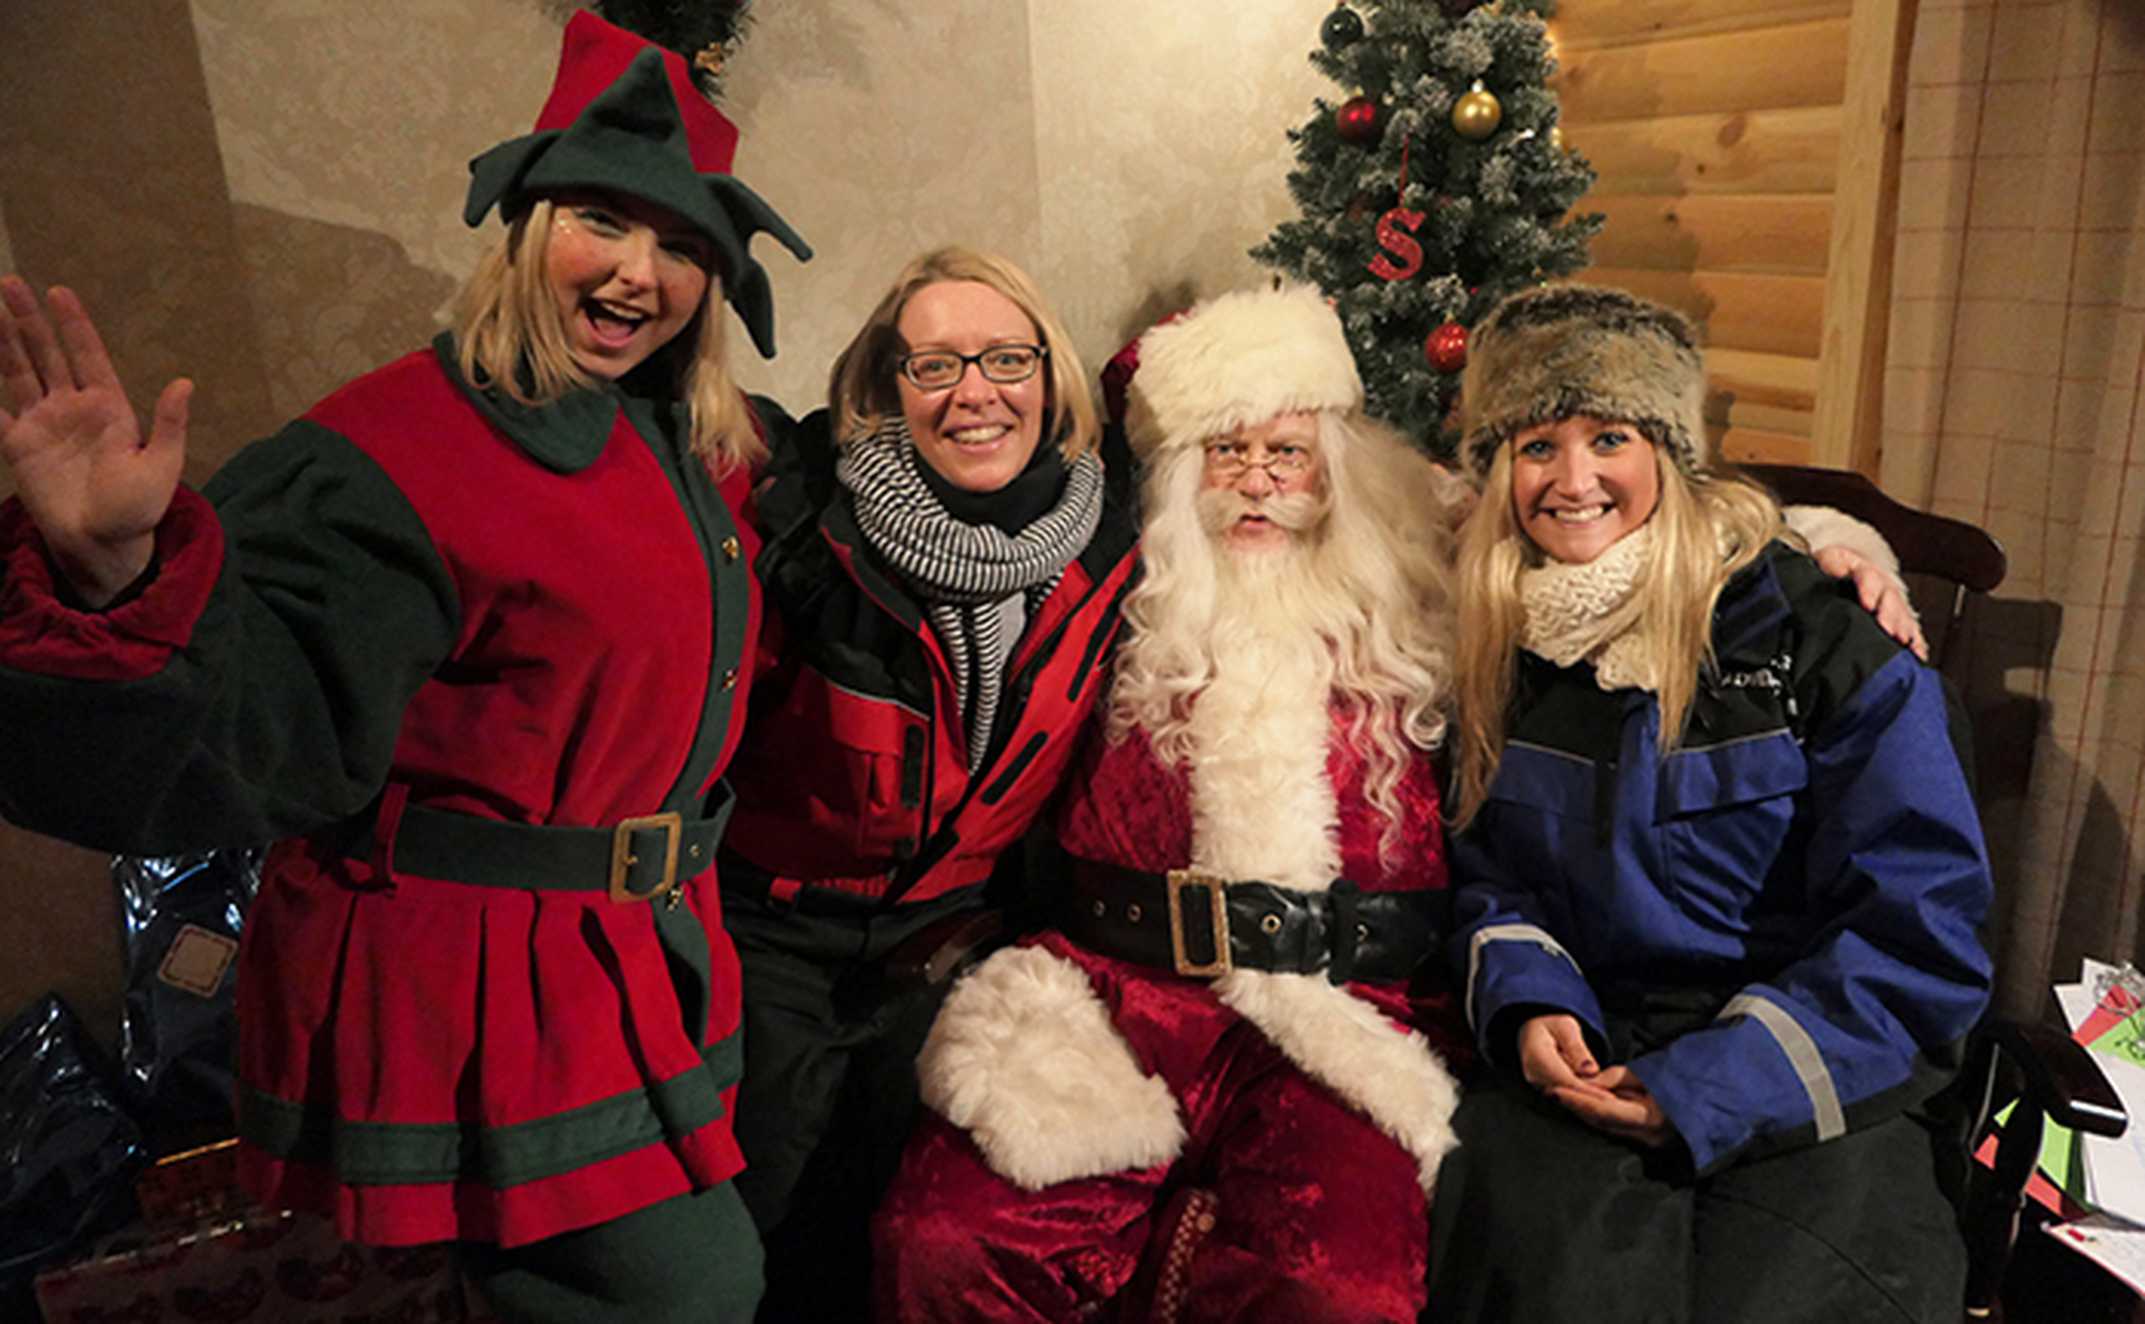 Santa with Helen, Steph and an elf